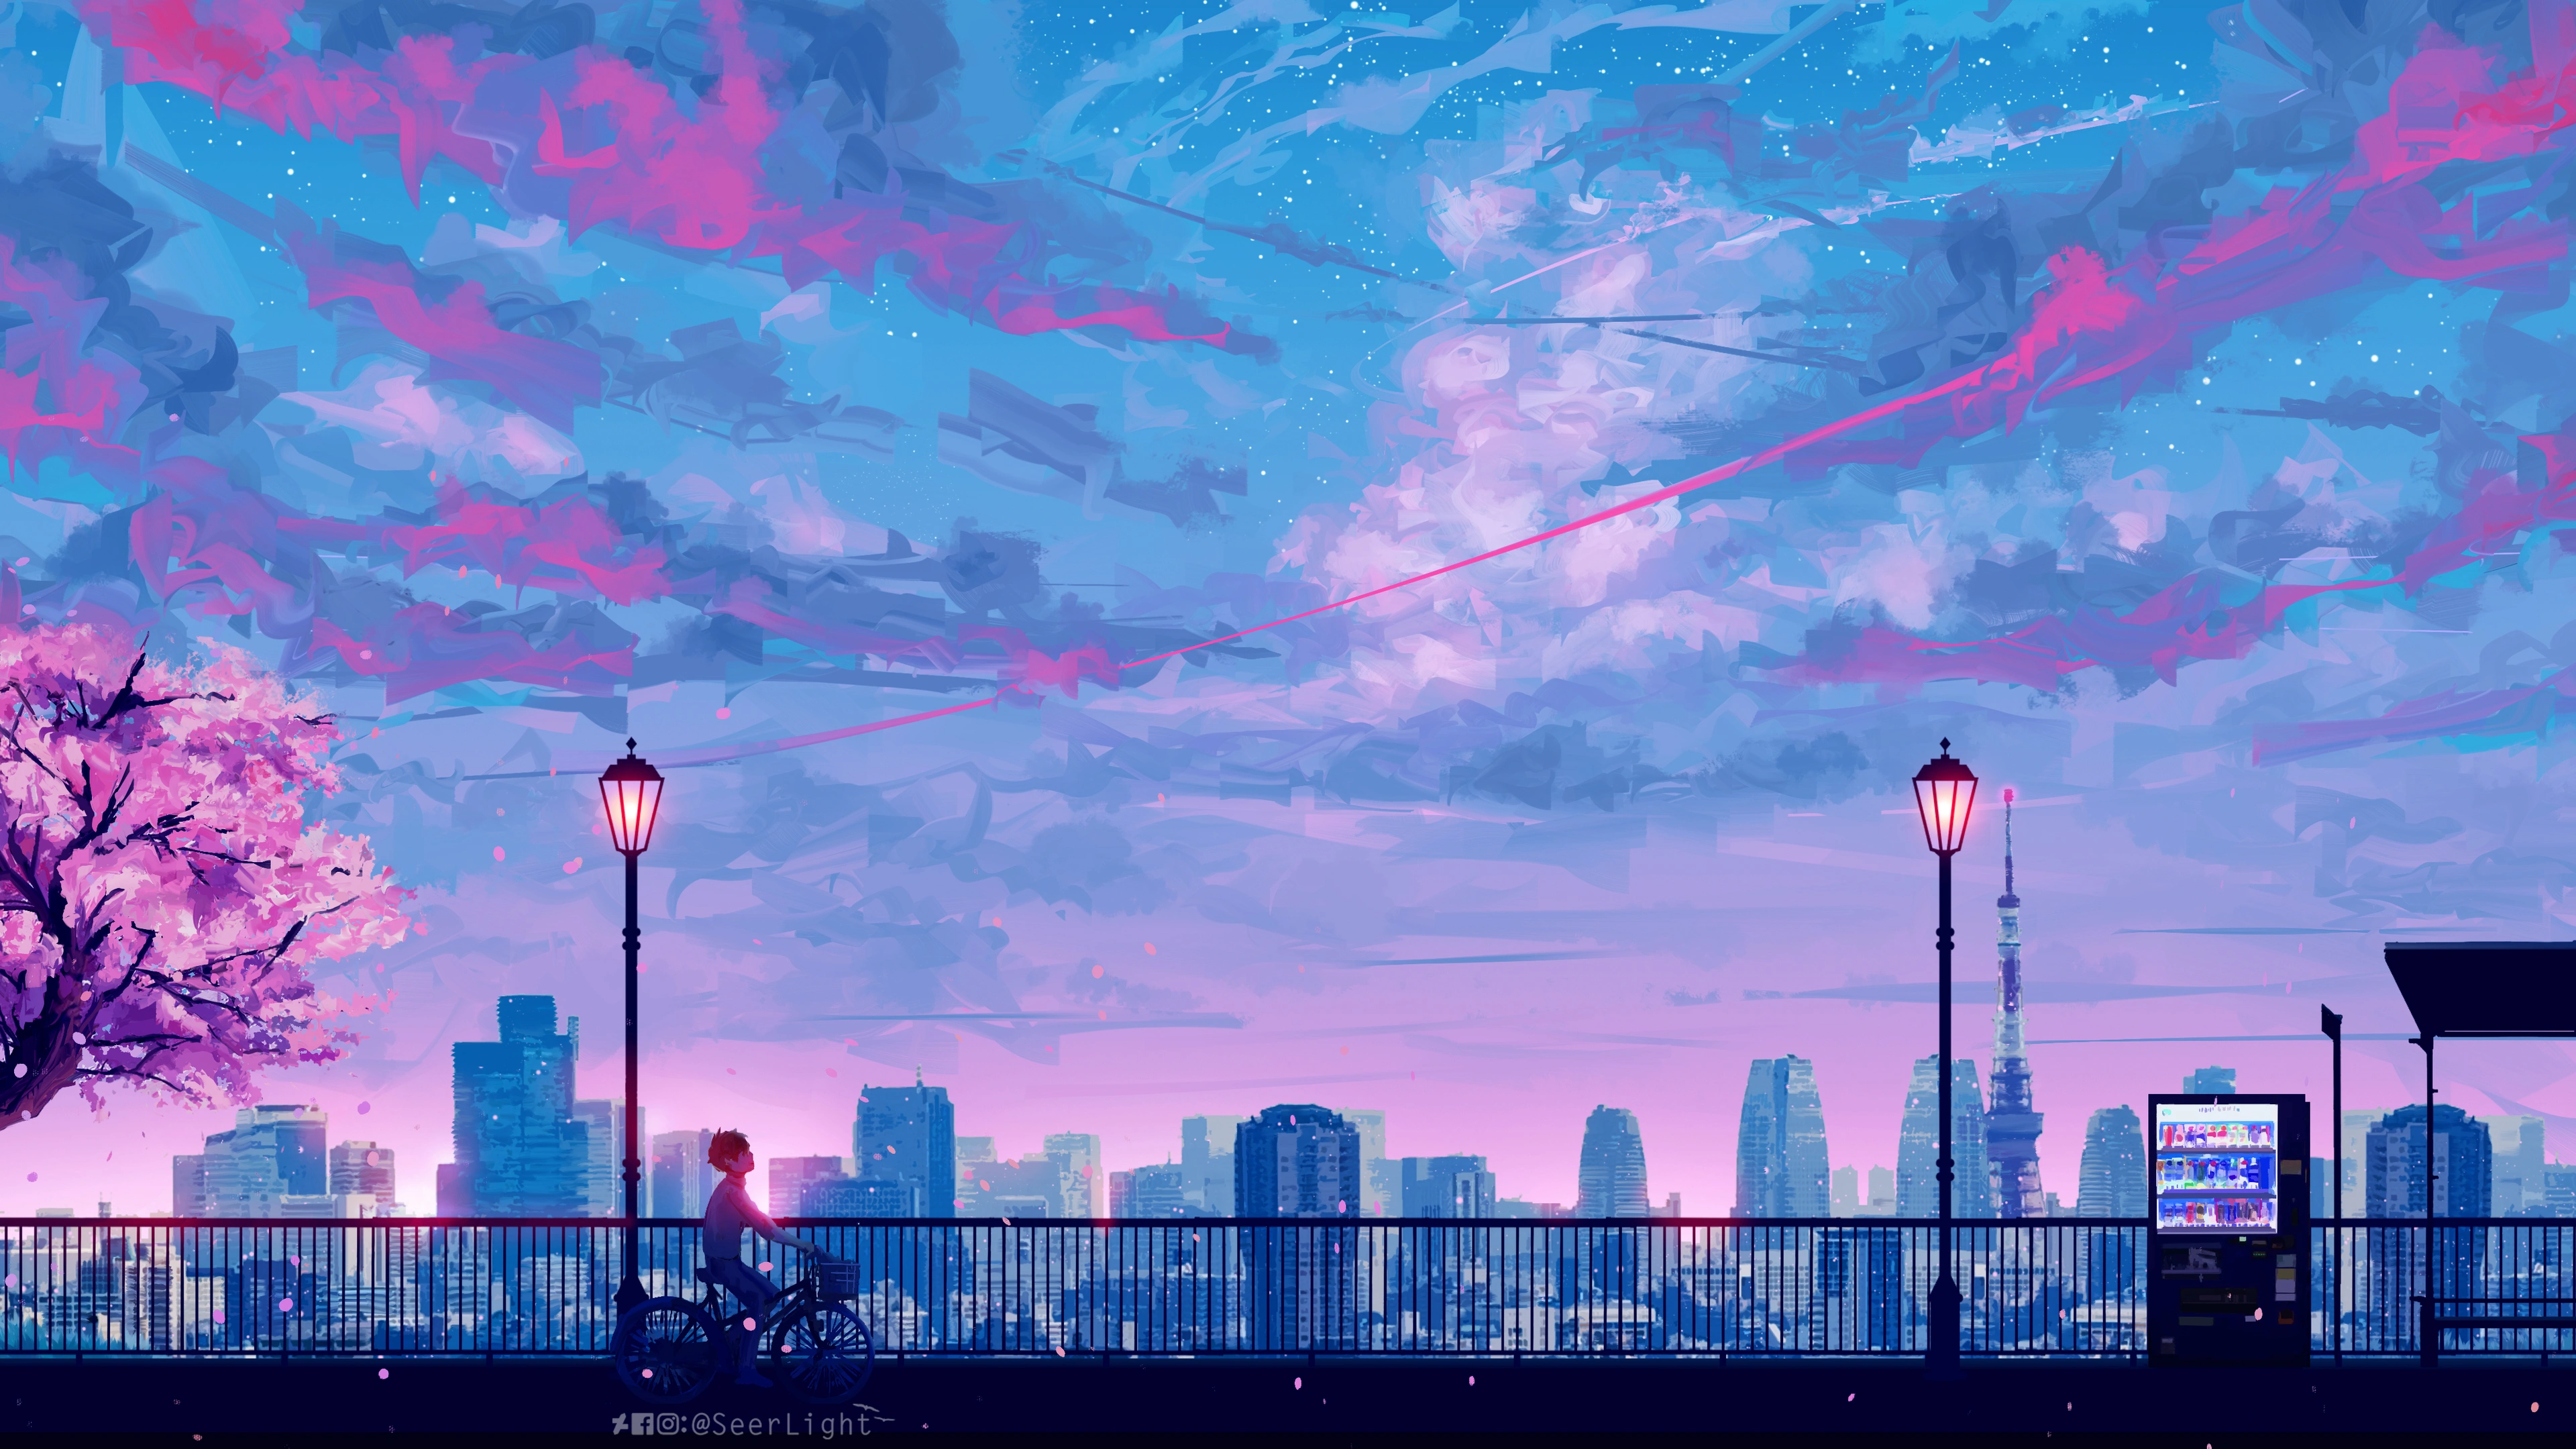 Wallpaper 4k Anime Cityscape Landscape Scenery 4k Wallpaper